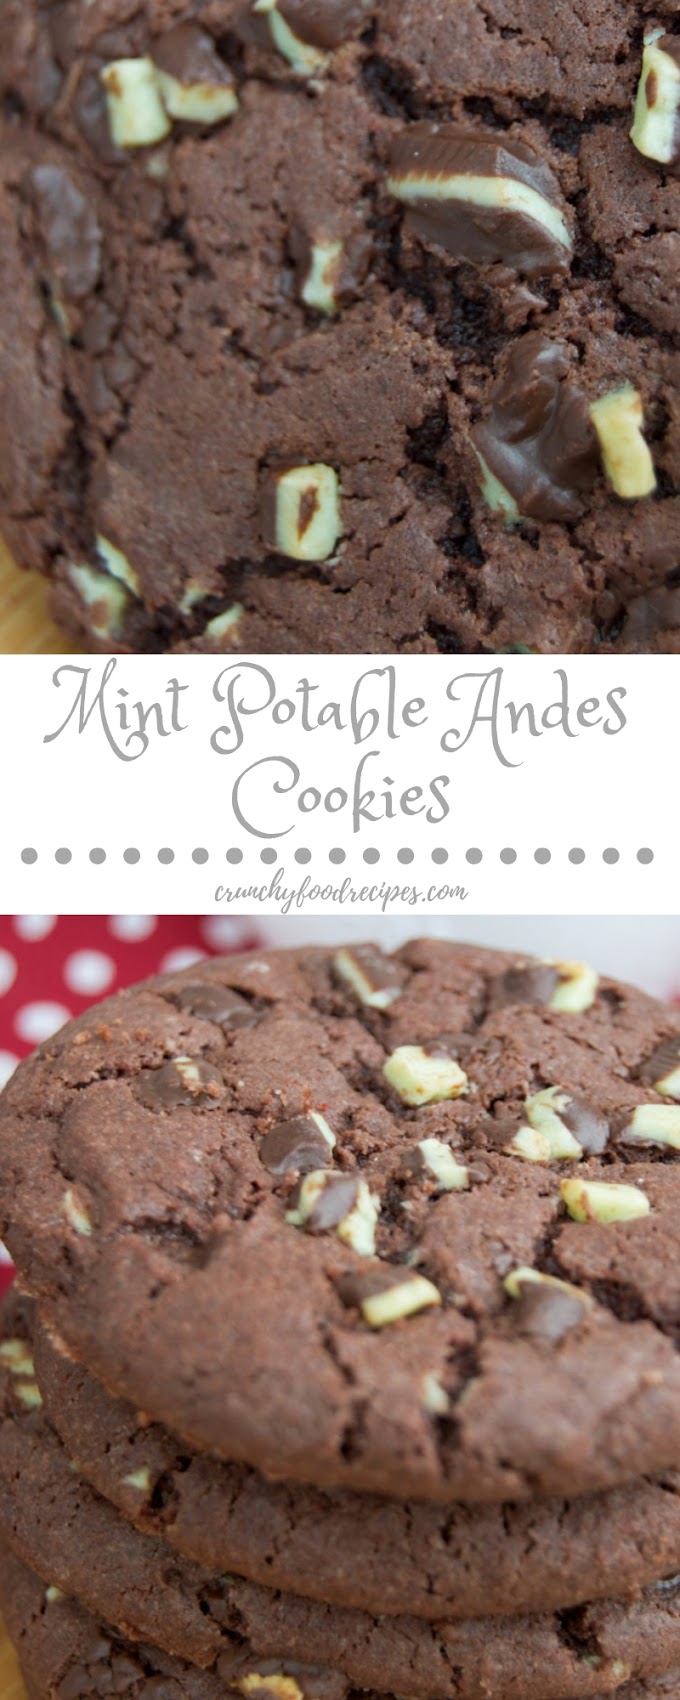 Mint Potable Andes Cookies #christmas #cookies